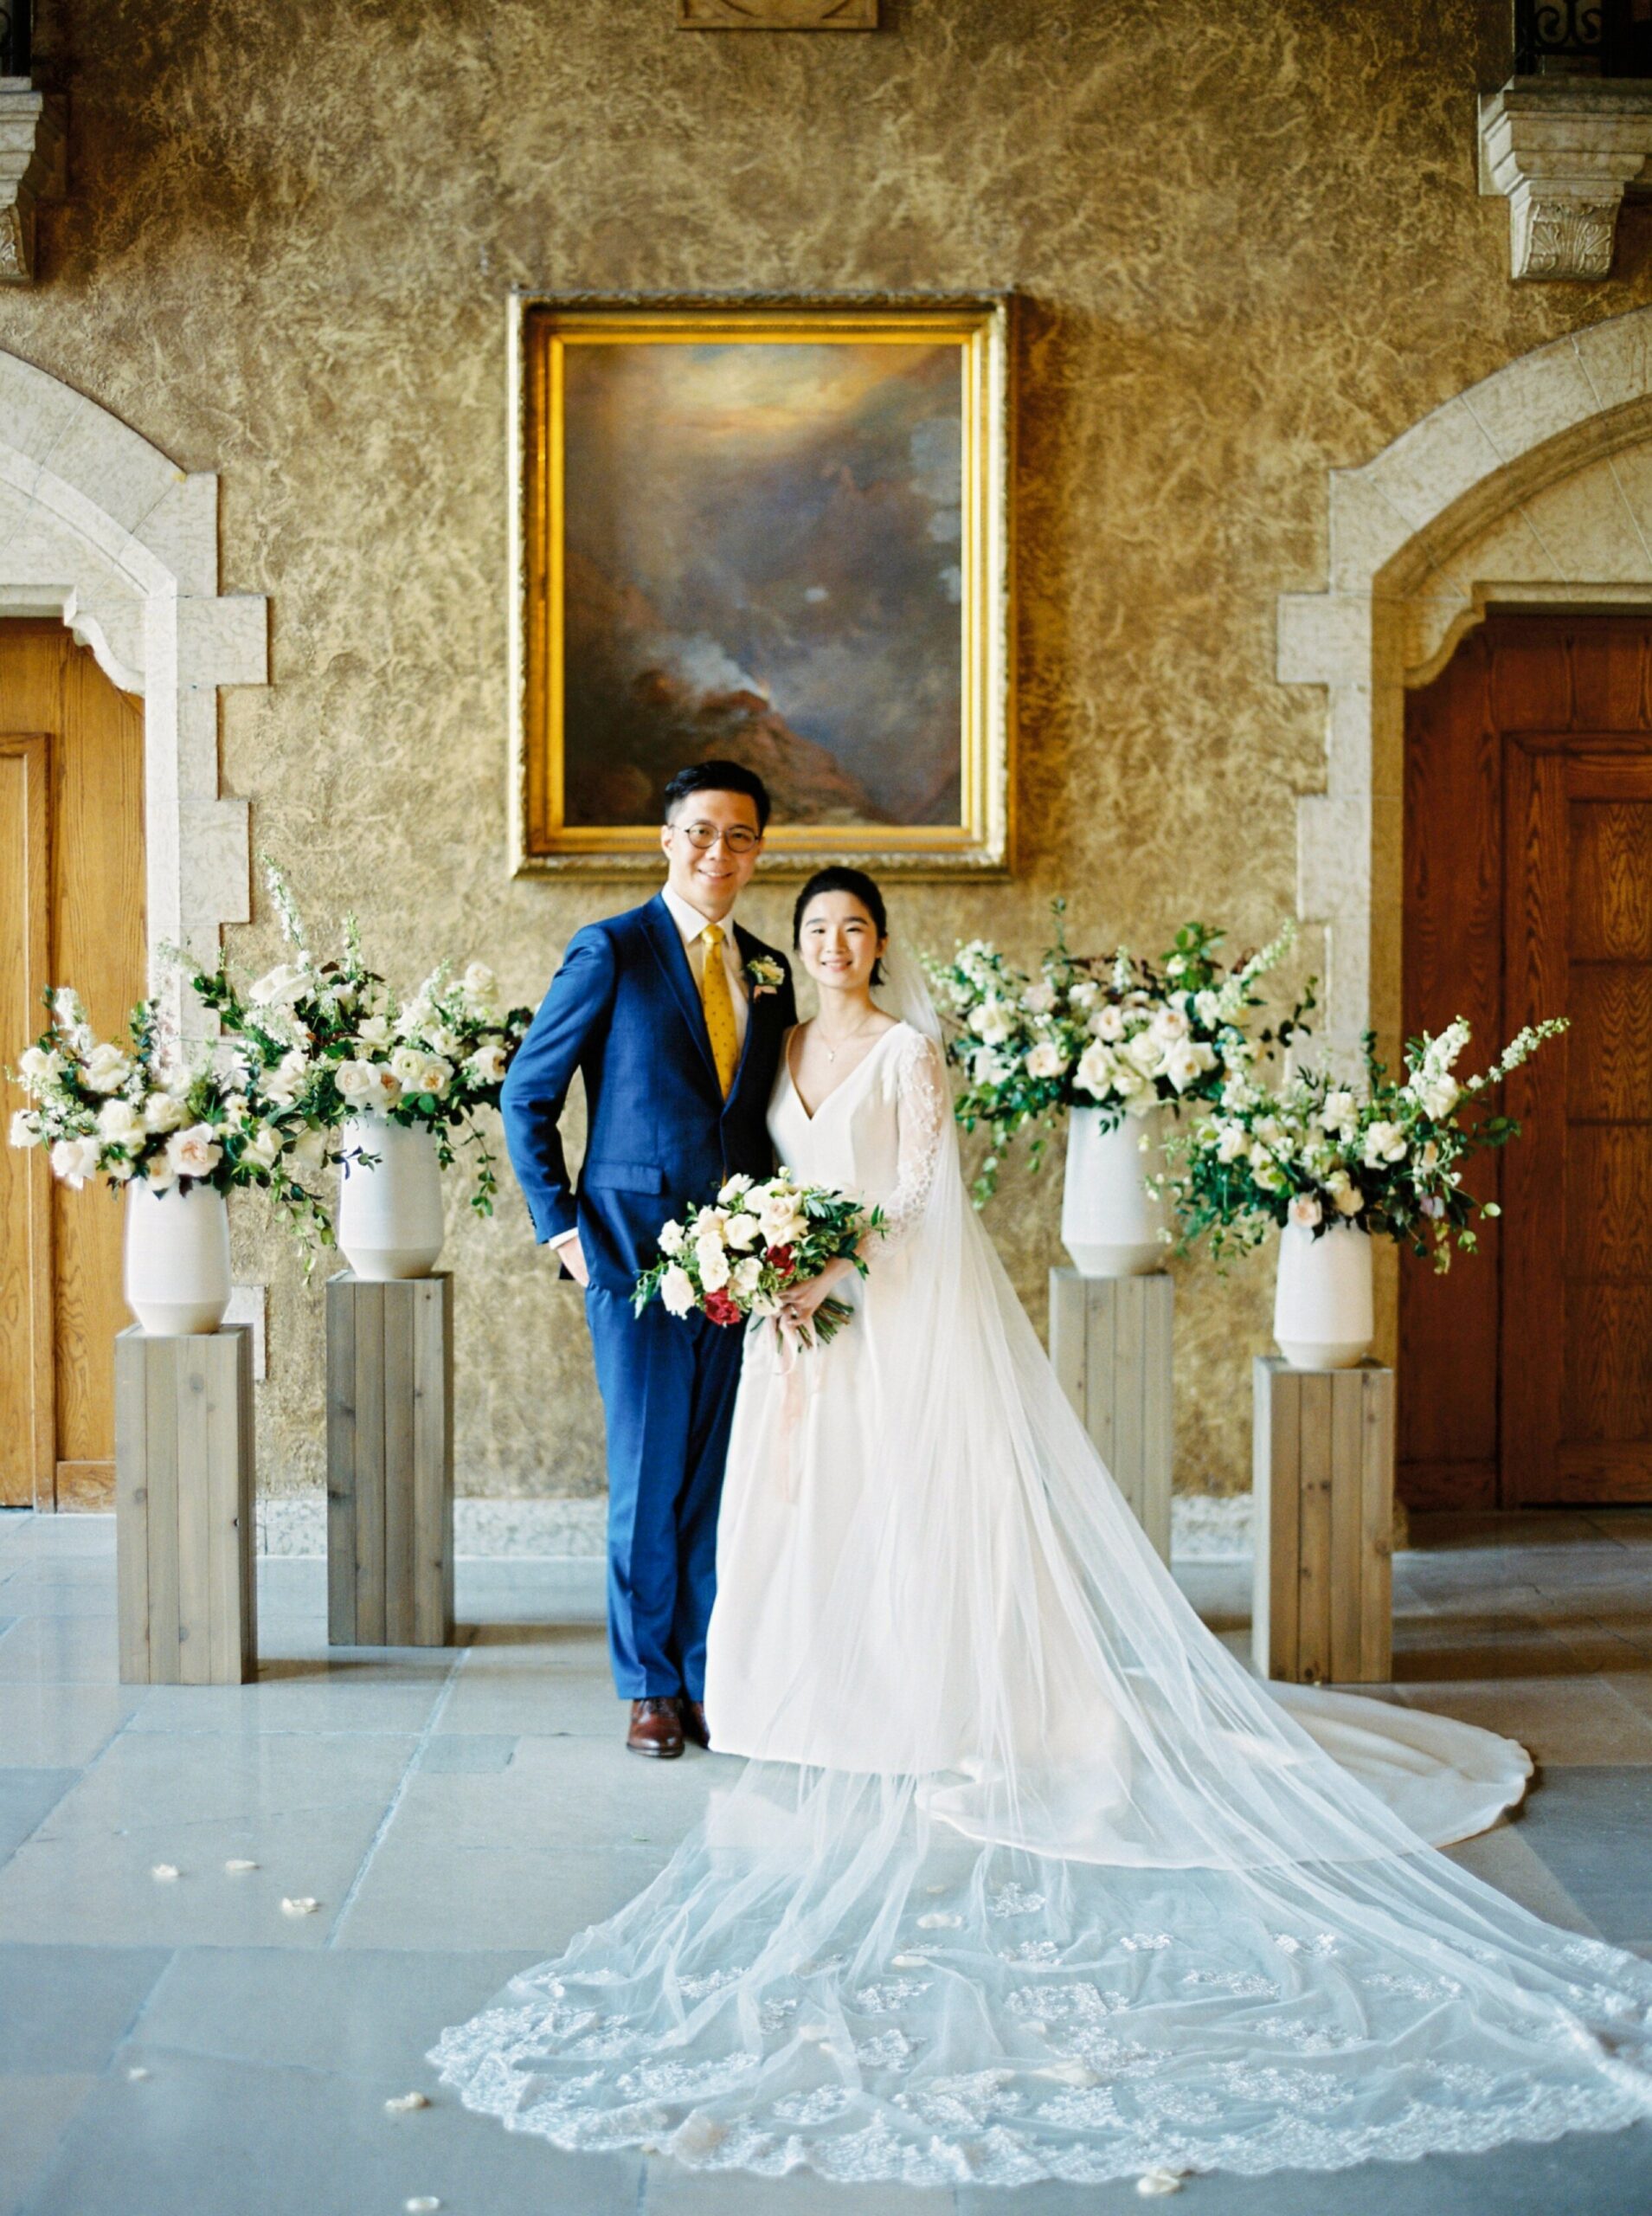  Mt Stephen Hall wedding ceremony | Fairmont Banff Springs hotel wedding photographers | fine art film photography | portra 400 